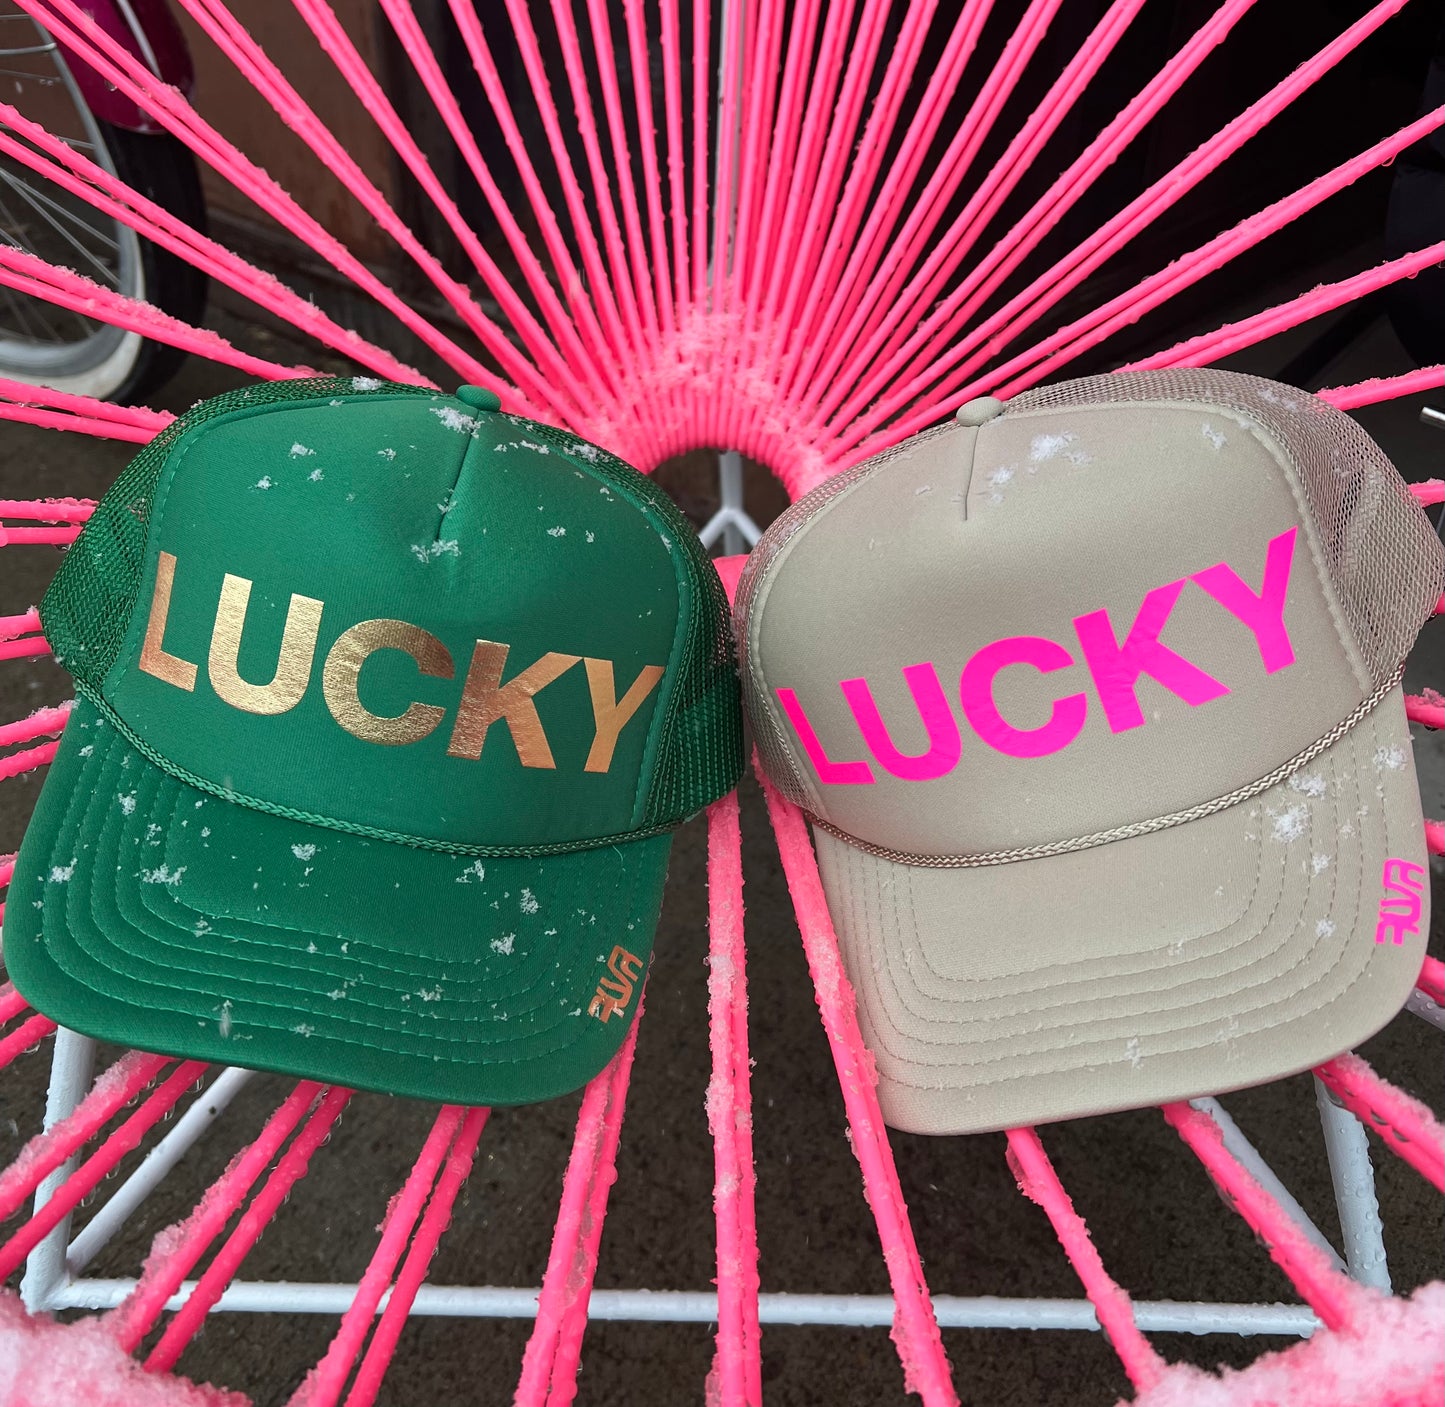 EskyFlavor LUCKY Hat